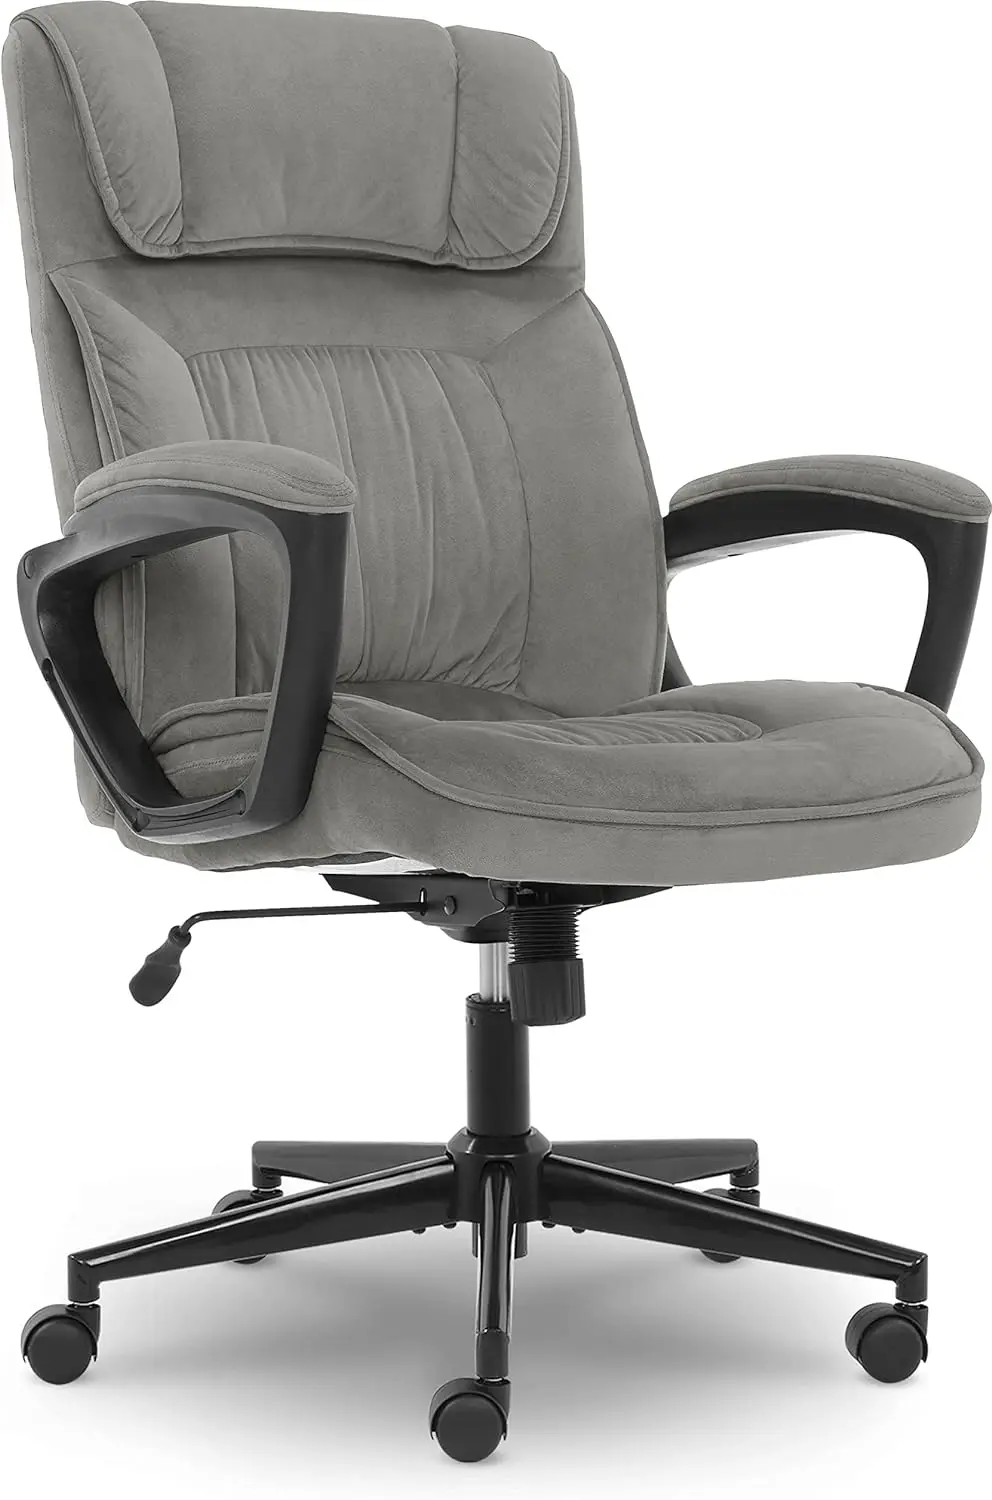 

Executive Office Chair Ergonomic Computer Upholstered Layered Body Pillows,Contoured Lumbar Zone,Base,Fabric,Black/Grey